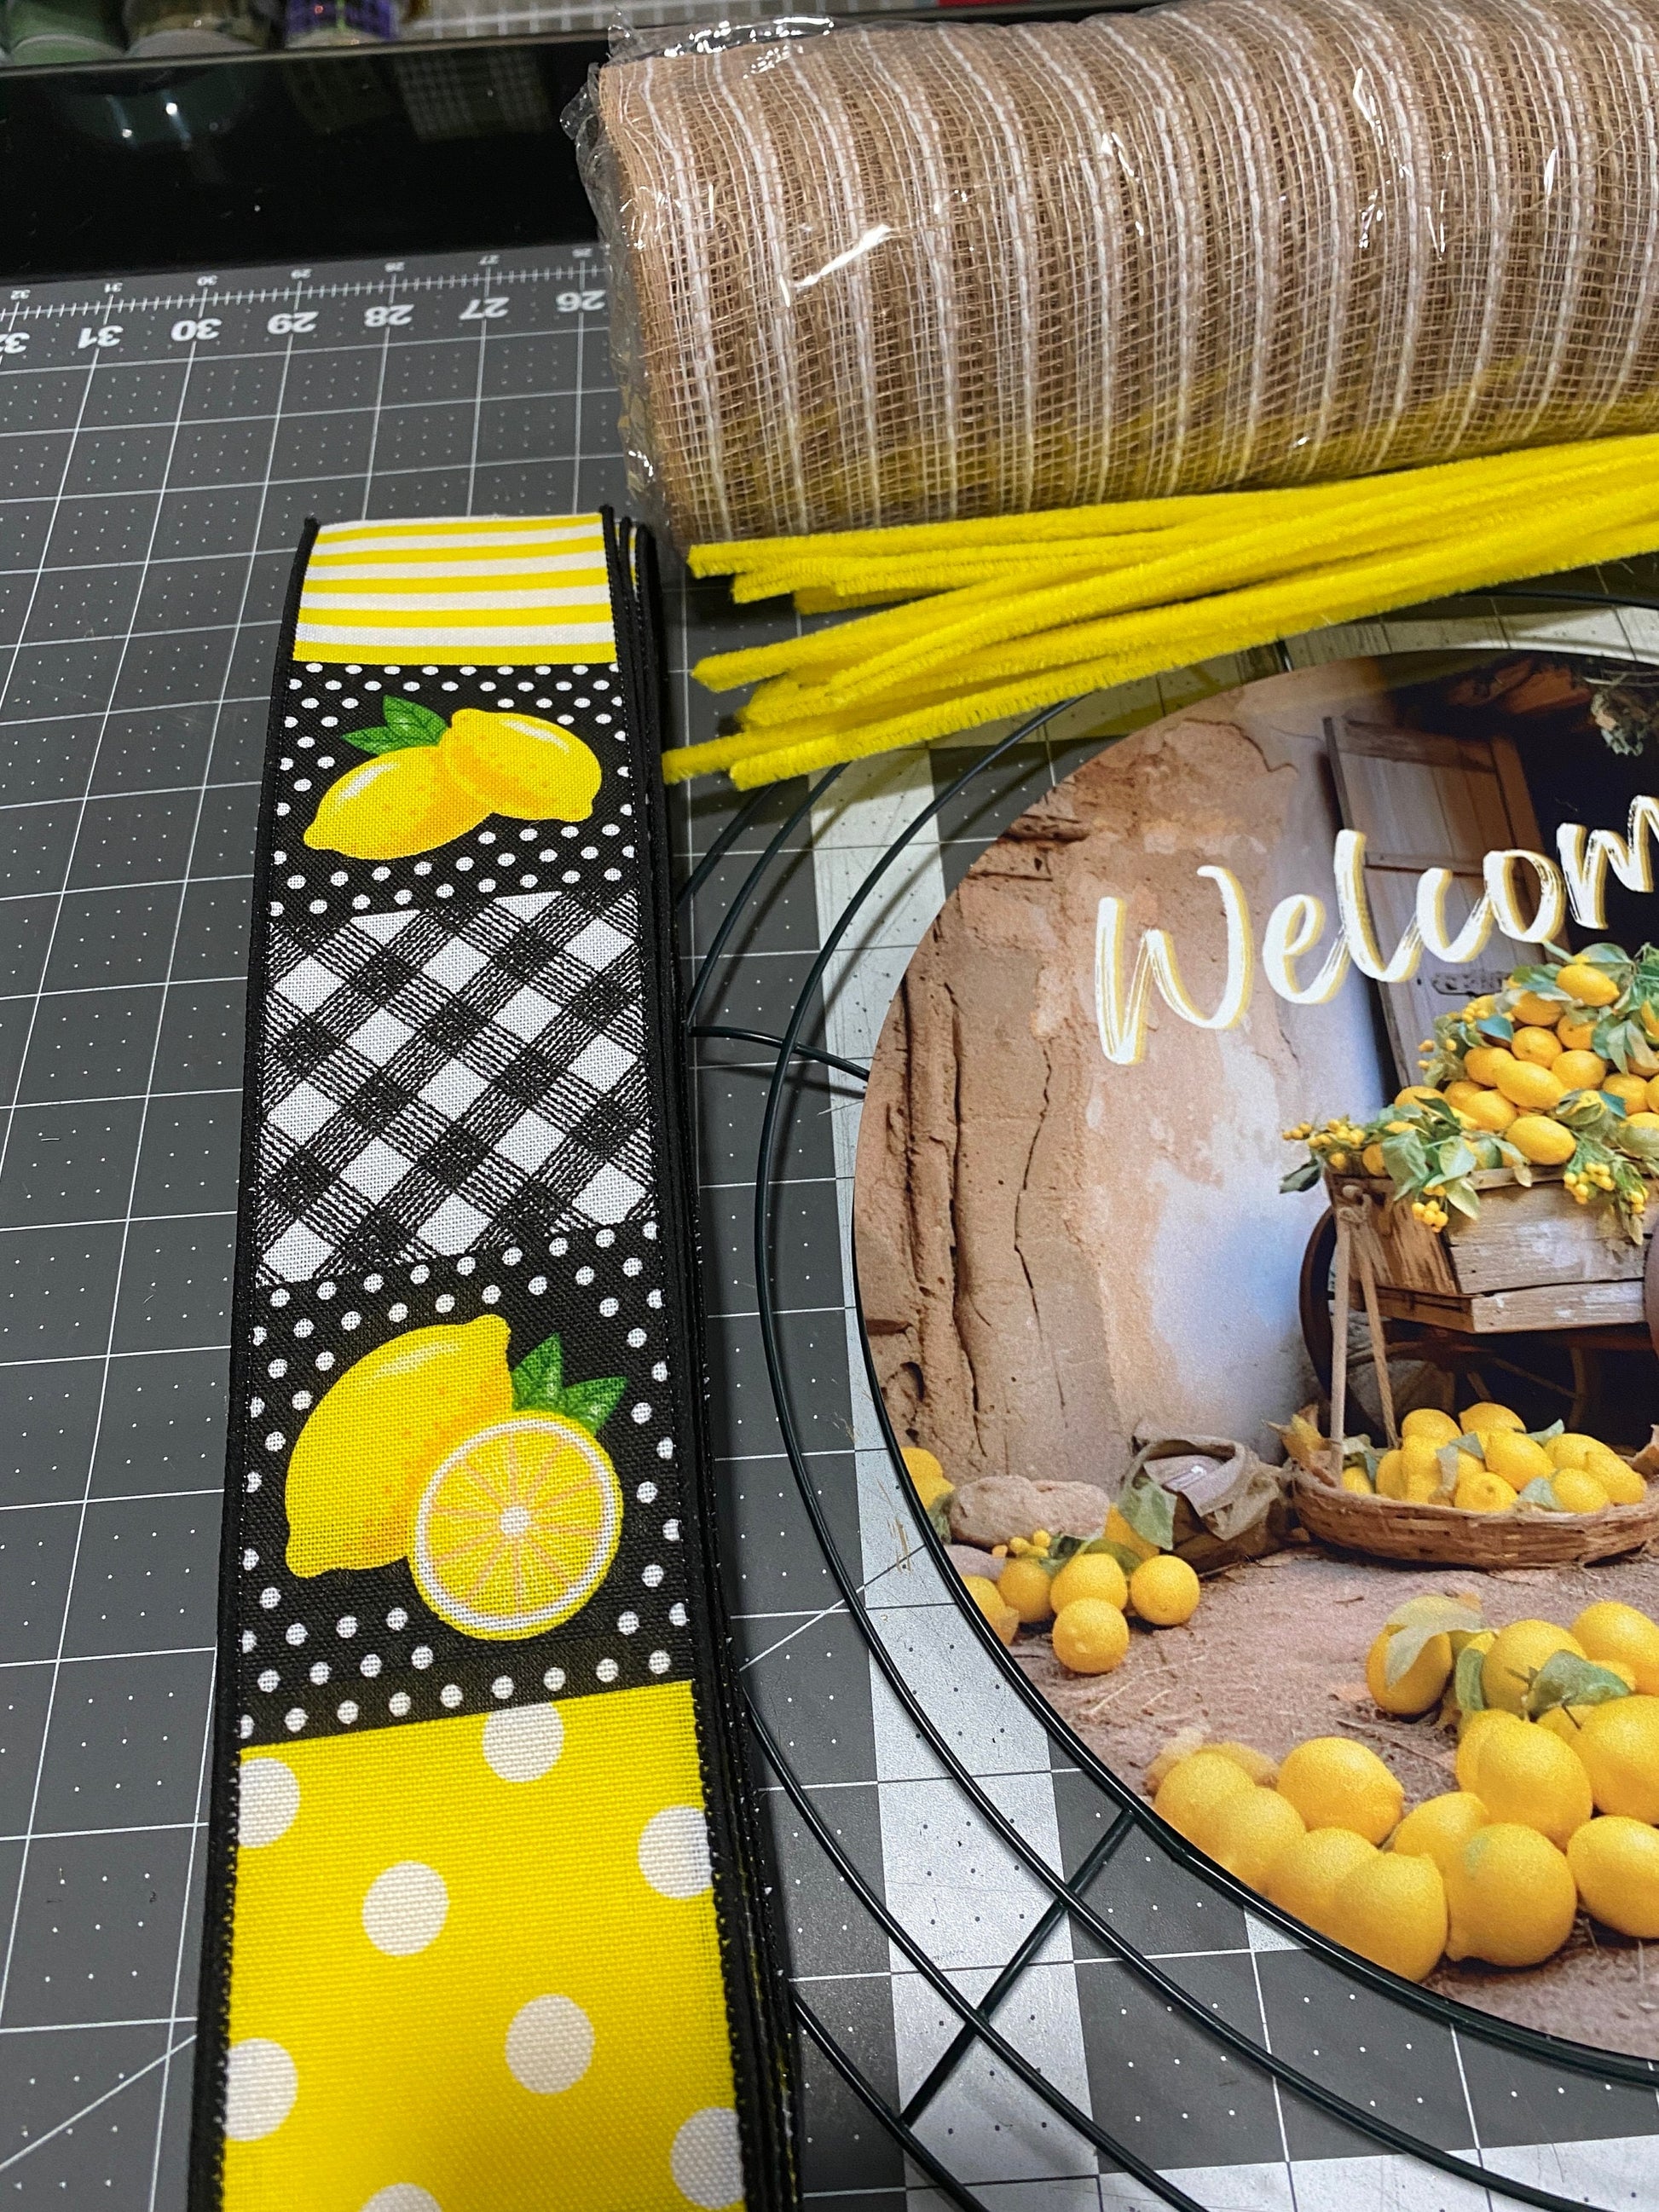 Lemon welcome wreath kit, deco mesh diy wreath kit, lemon sign & ribbon kit, make your own wreath, craft supplies for wreath and instruction